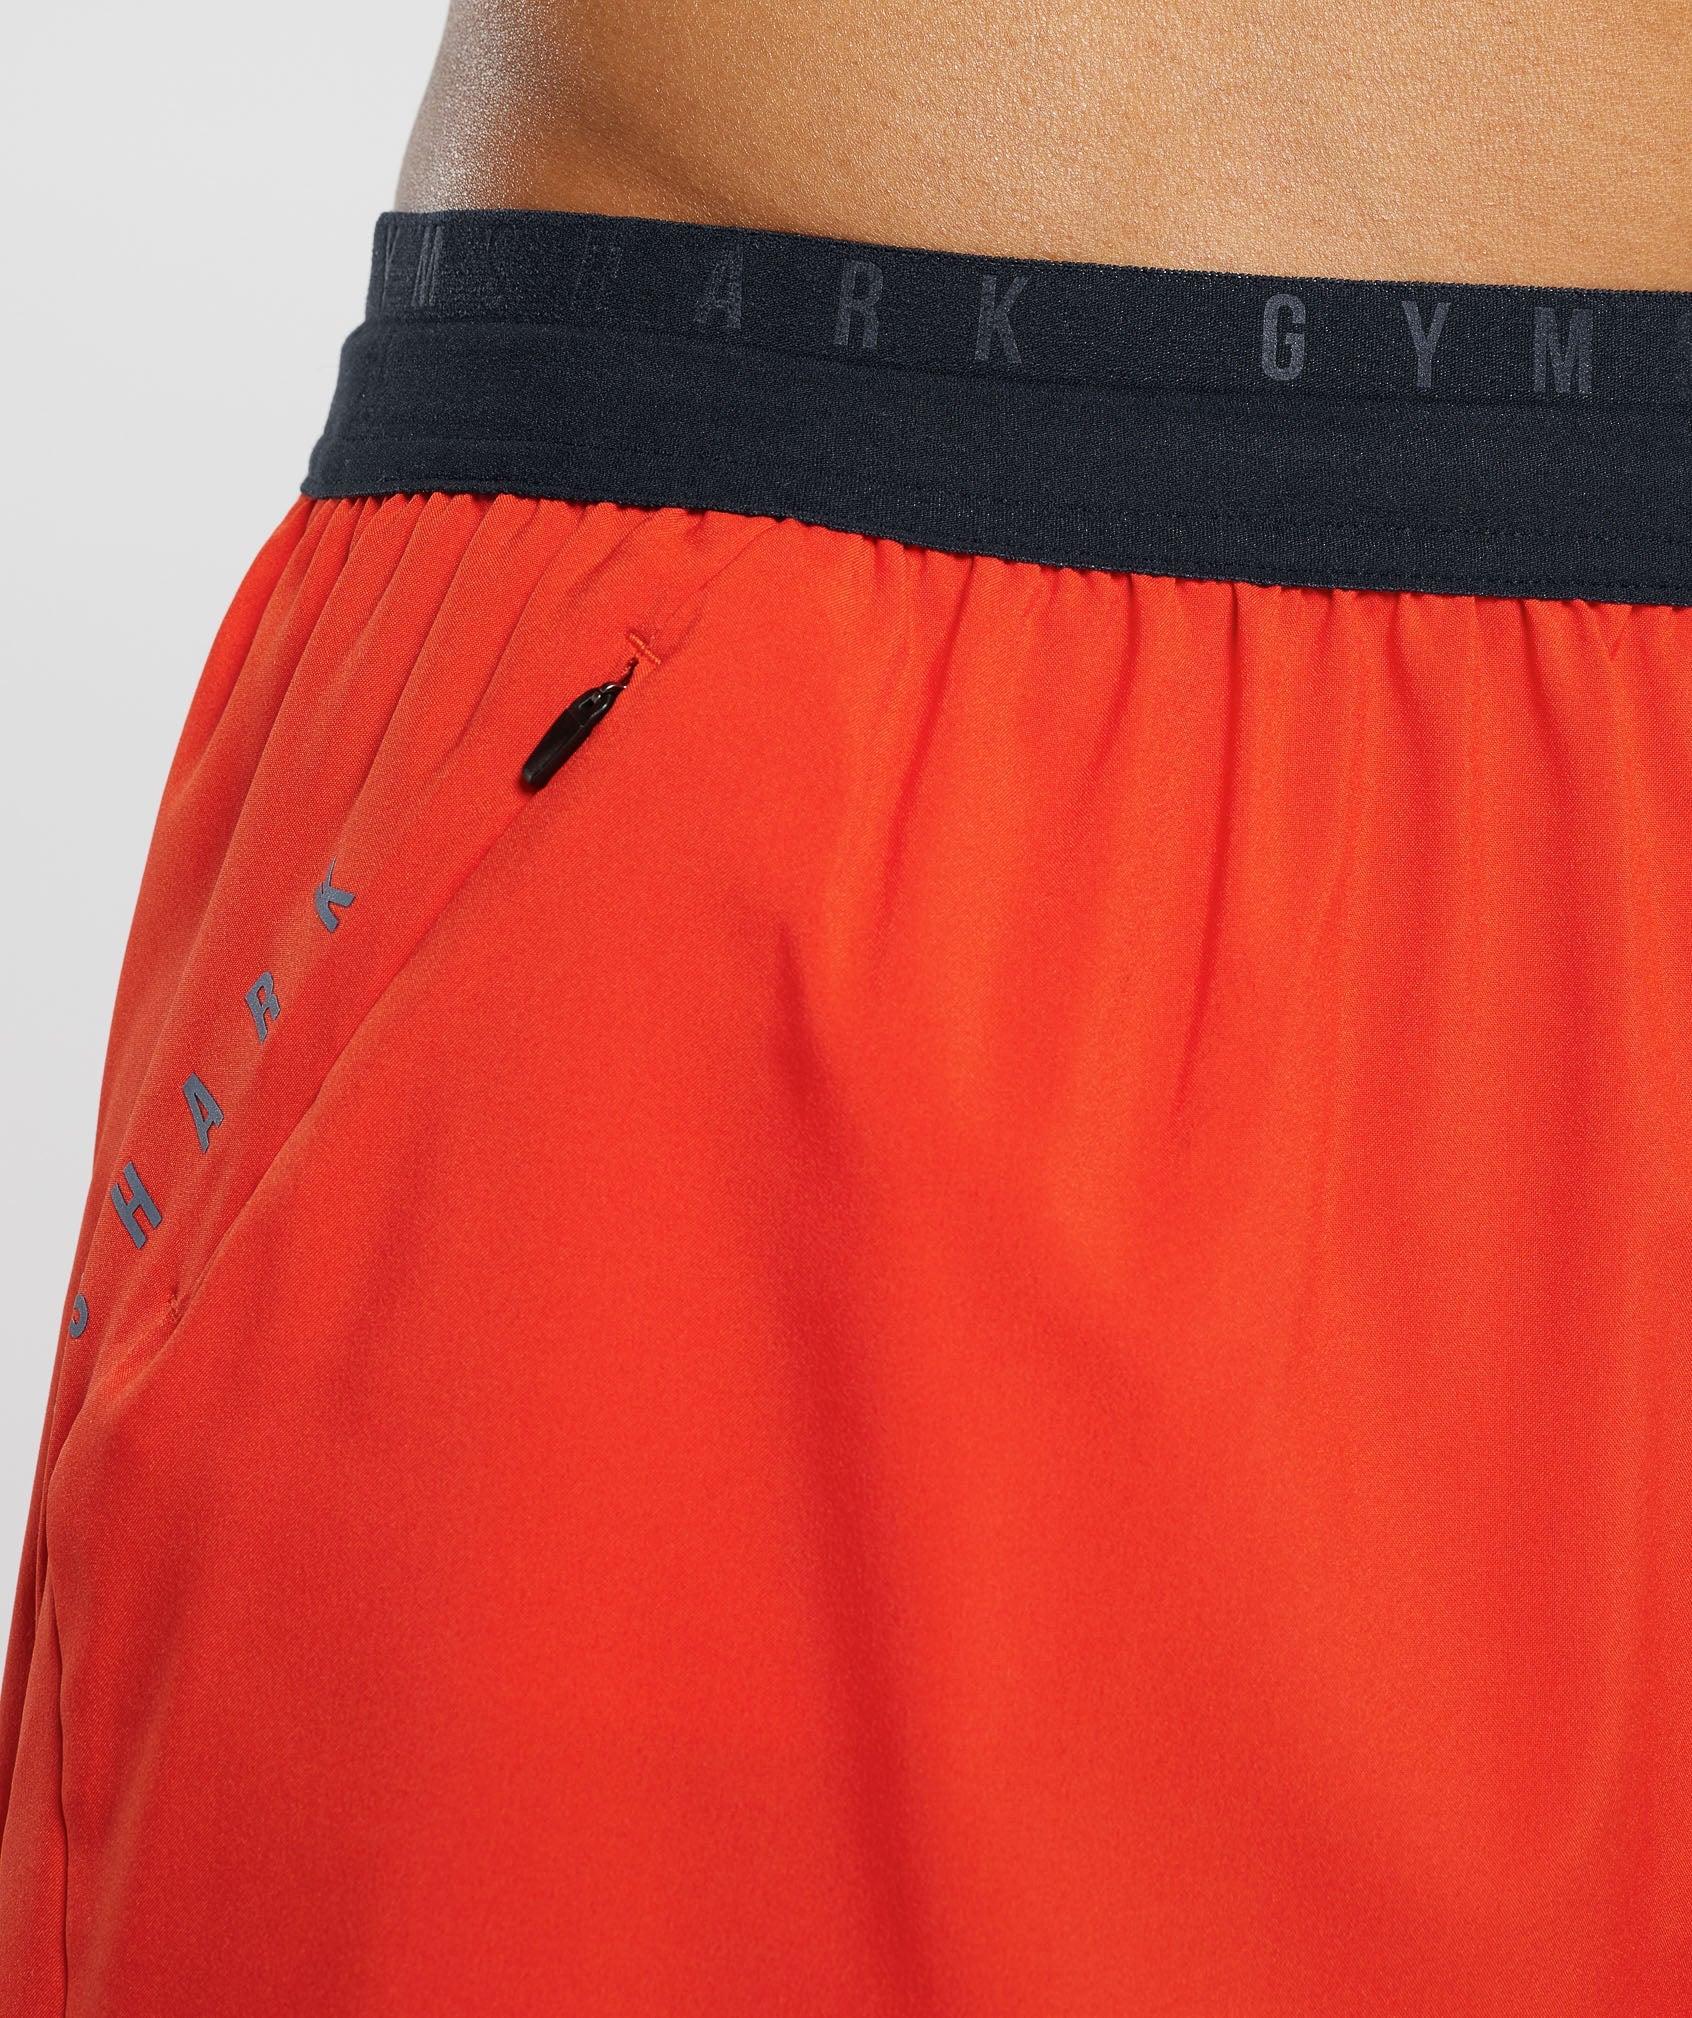 Sport Run 3" Shorts in Electric Orange - view 6